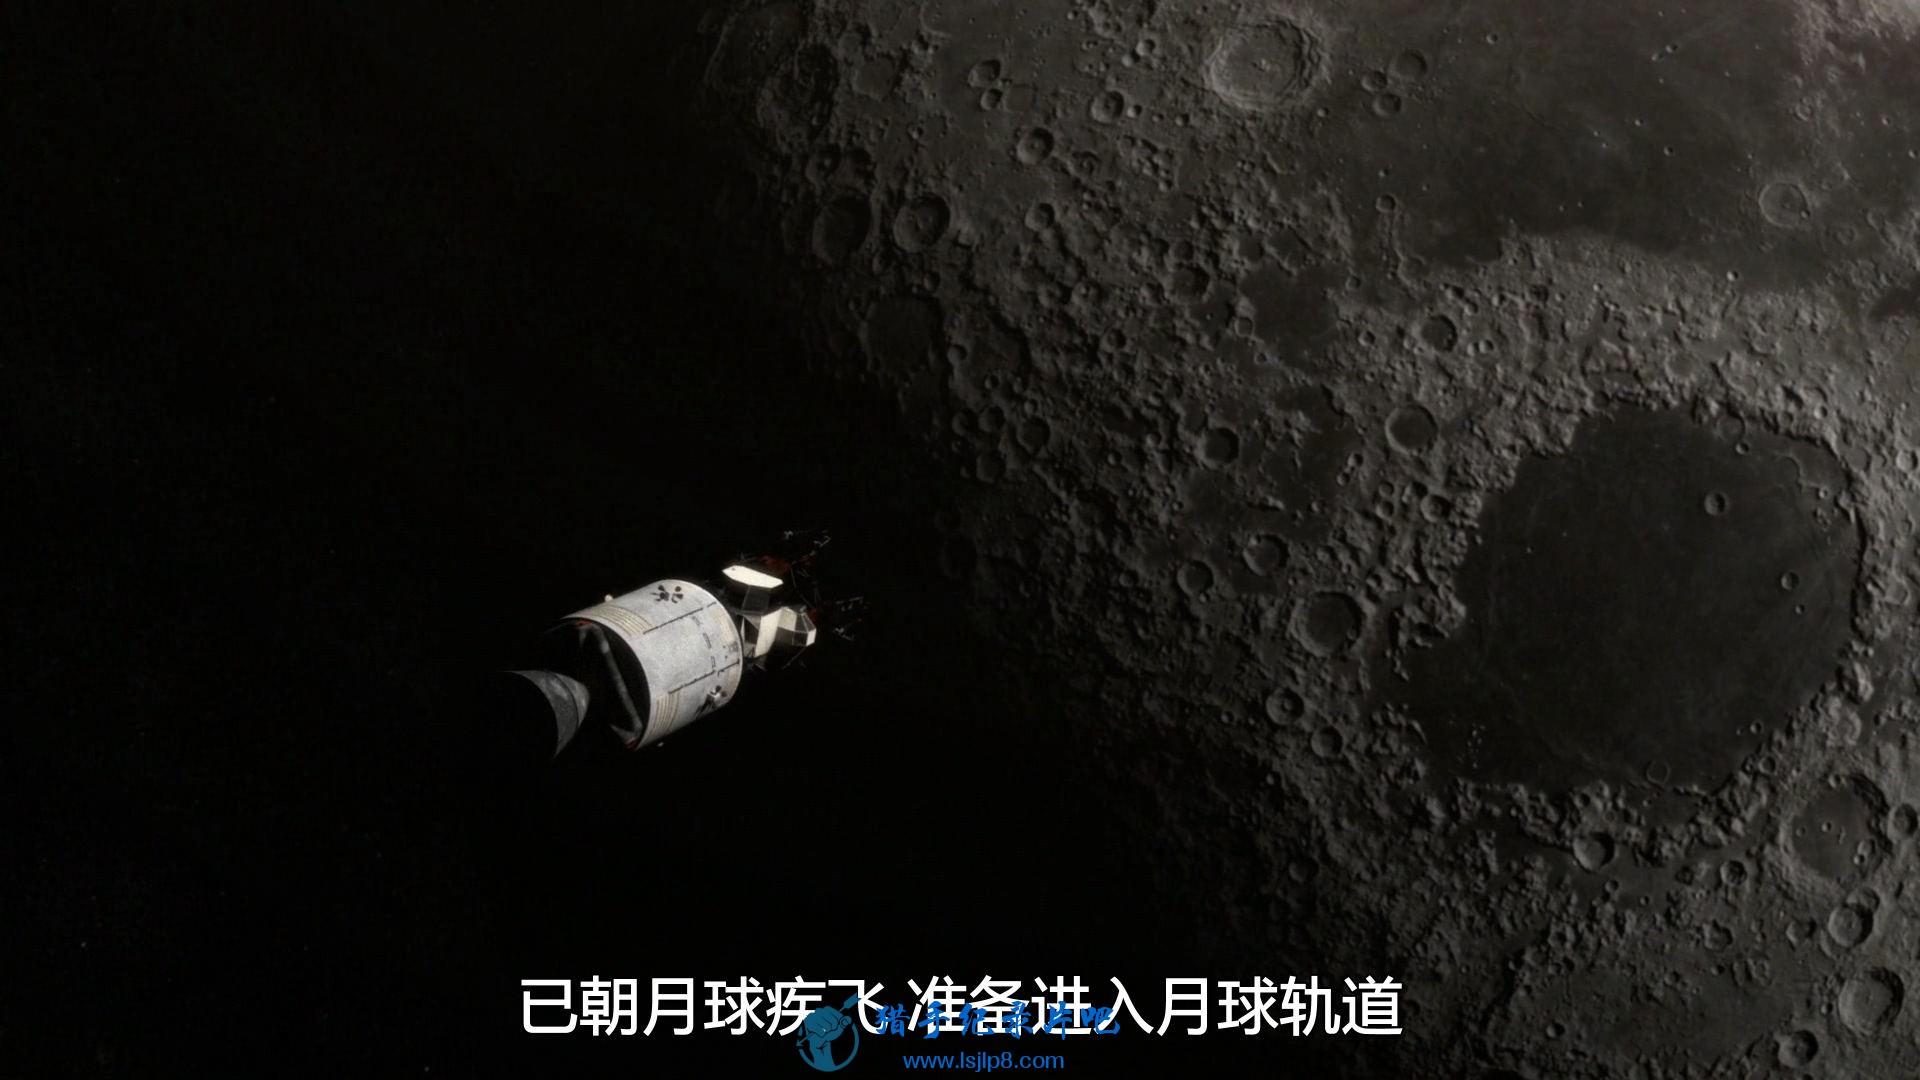 Apollo.Back.To.The.Moon.S01E01.1080p.DSNP.WEB-DL.DDP5.1.H.264-QOQ.mkv.jpg